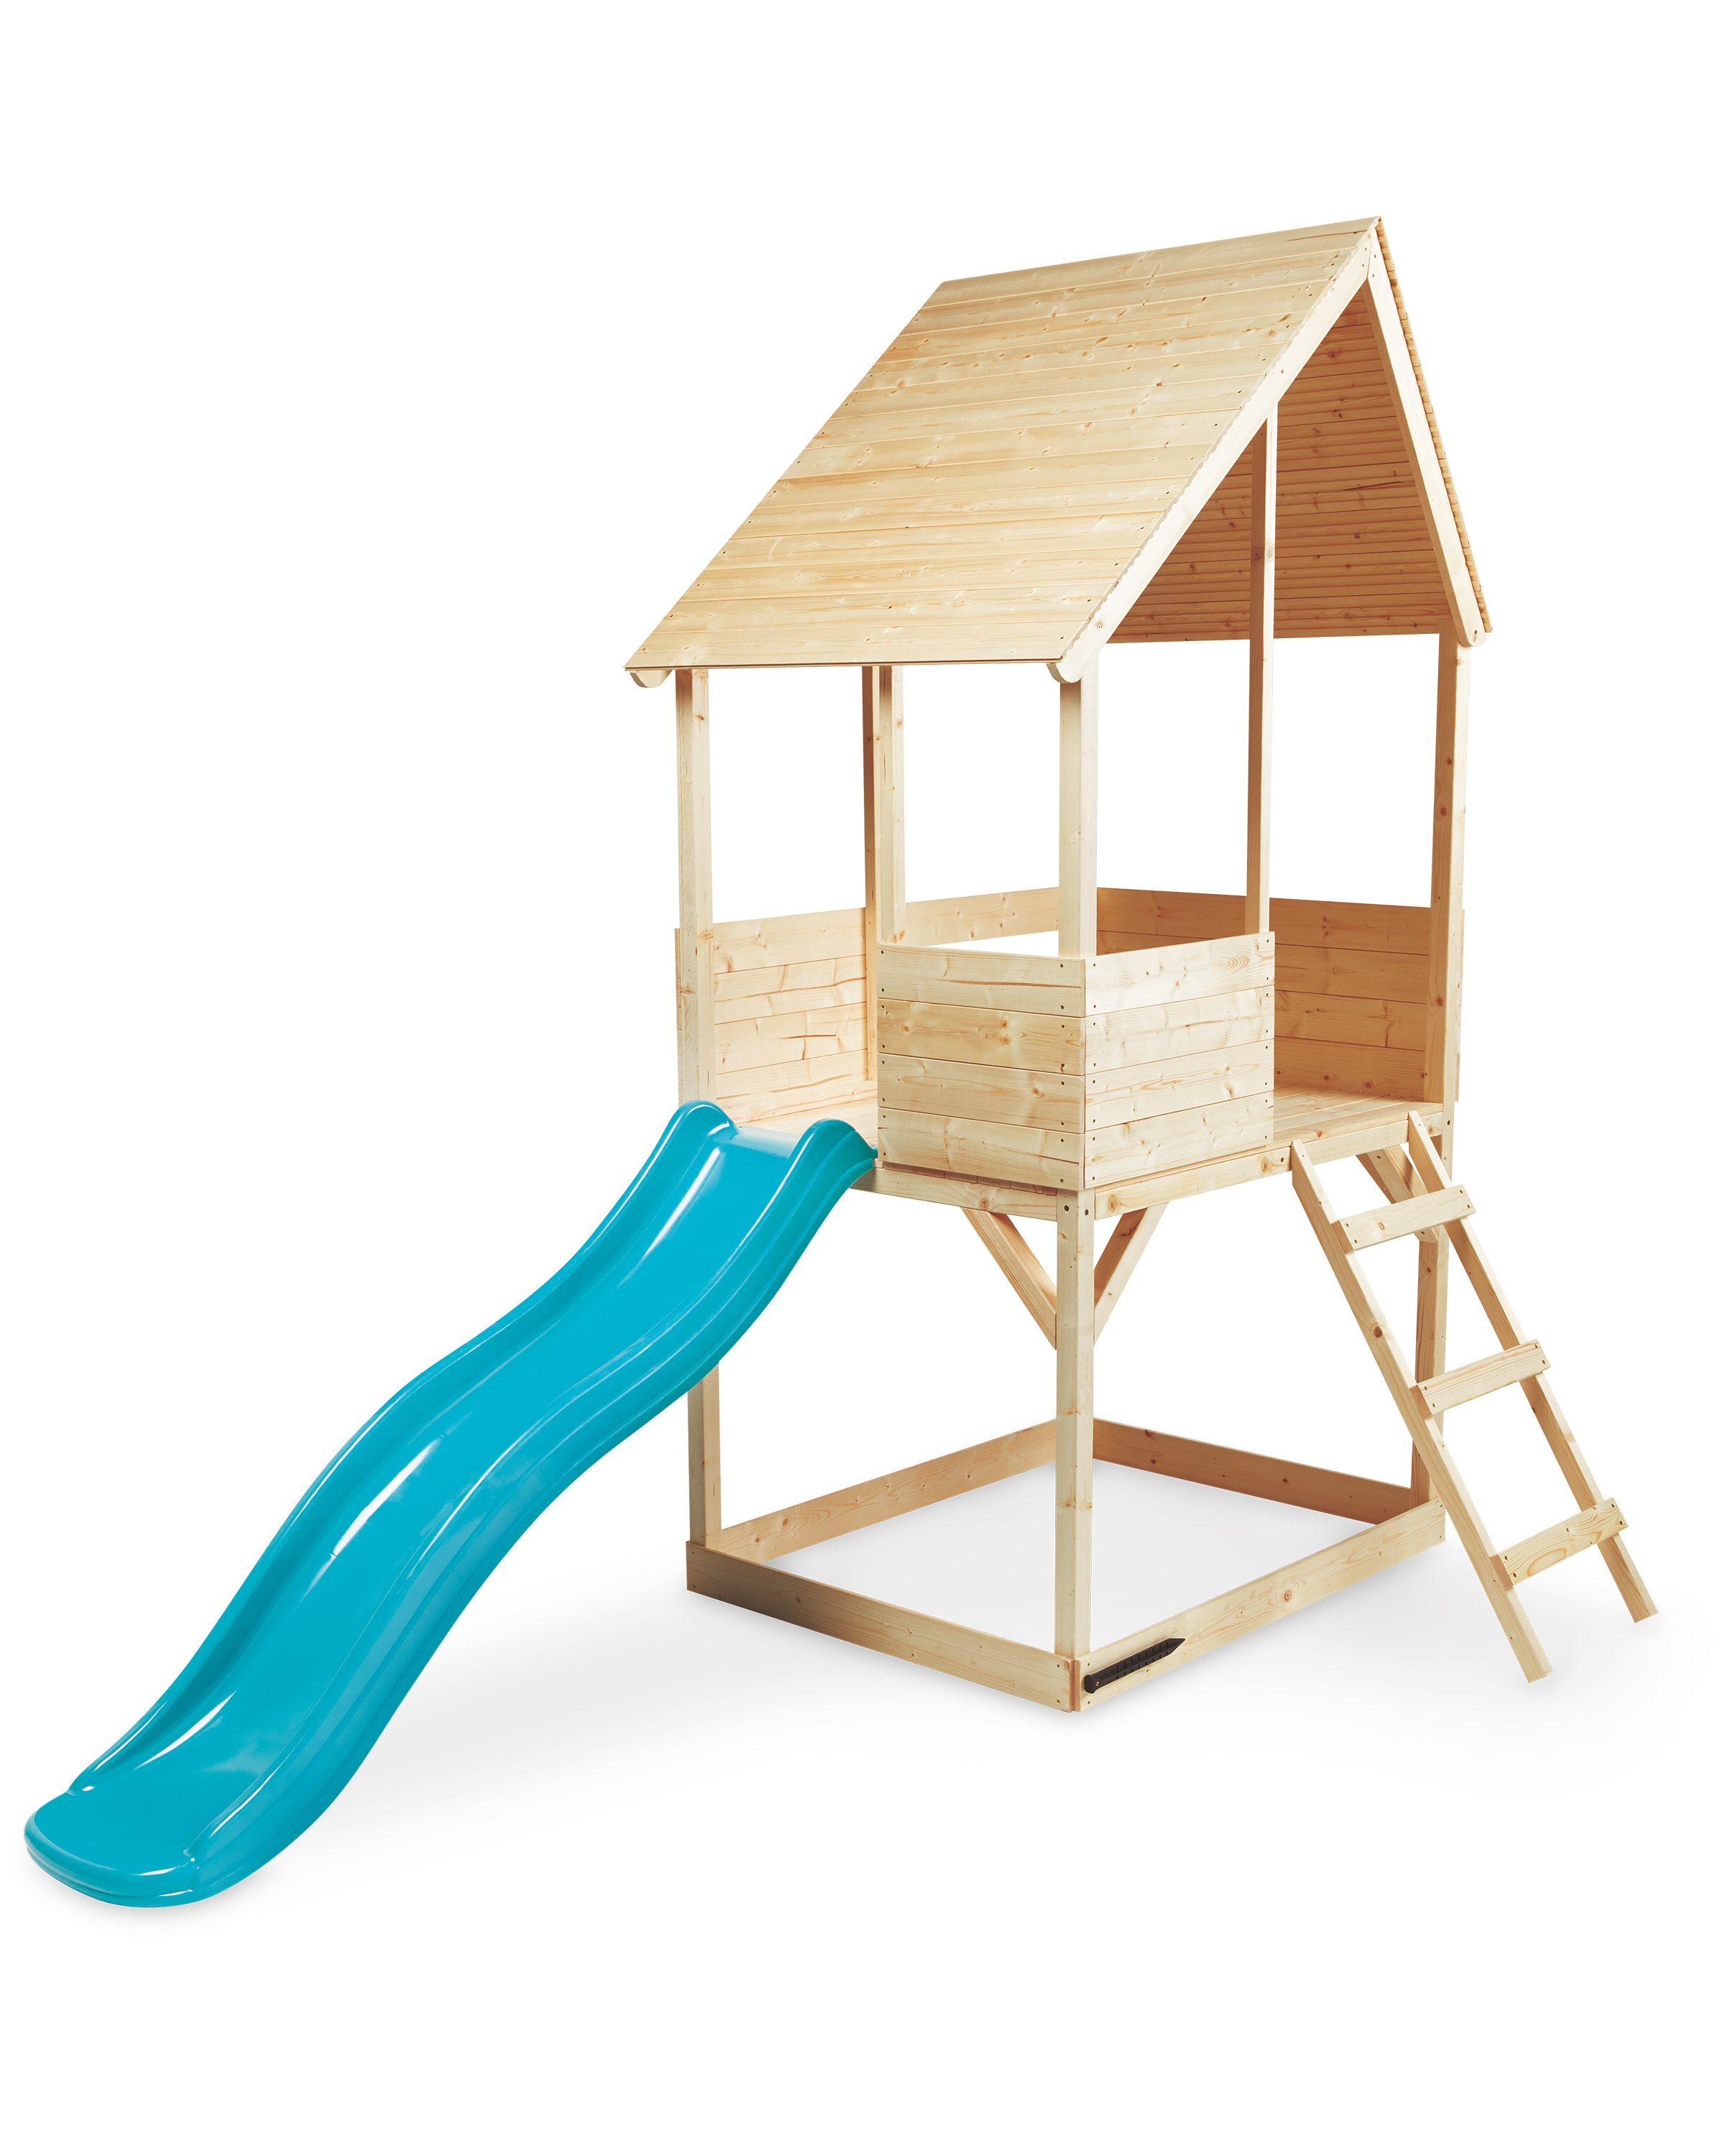 Kids Wooden Playhouse With Slide Aldi Uk, Toddler Outdoor Playhouse With Slide